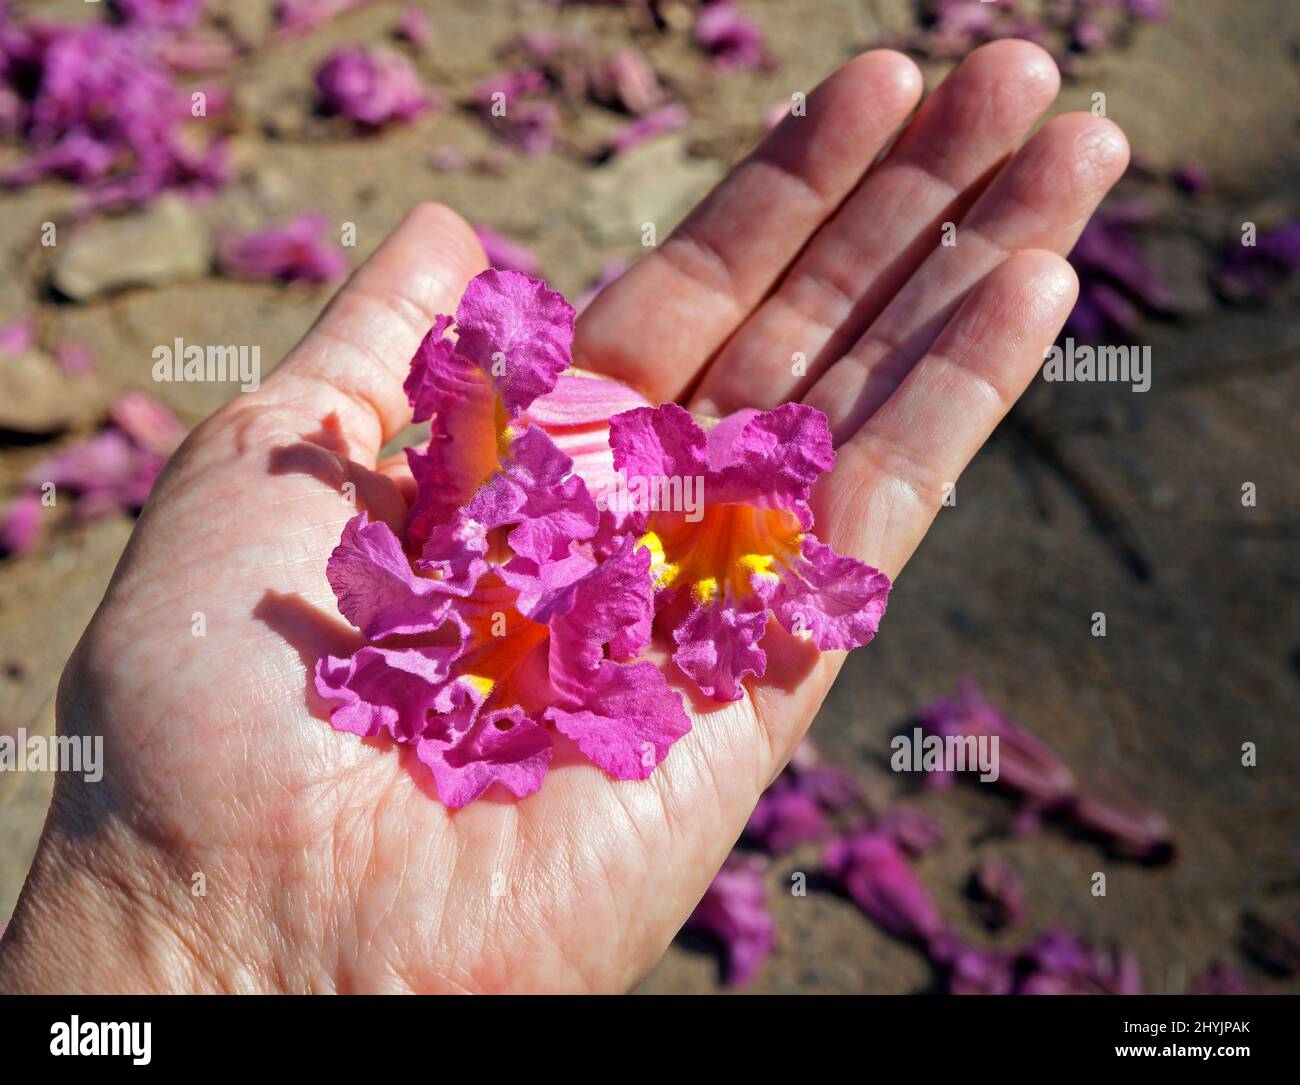 Pink ipe or pink trumpet tree flowers, (Handroanthus impetiginosus) on hand Stock Photo